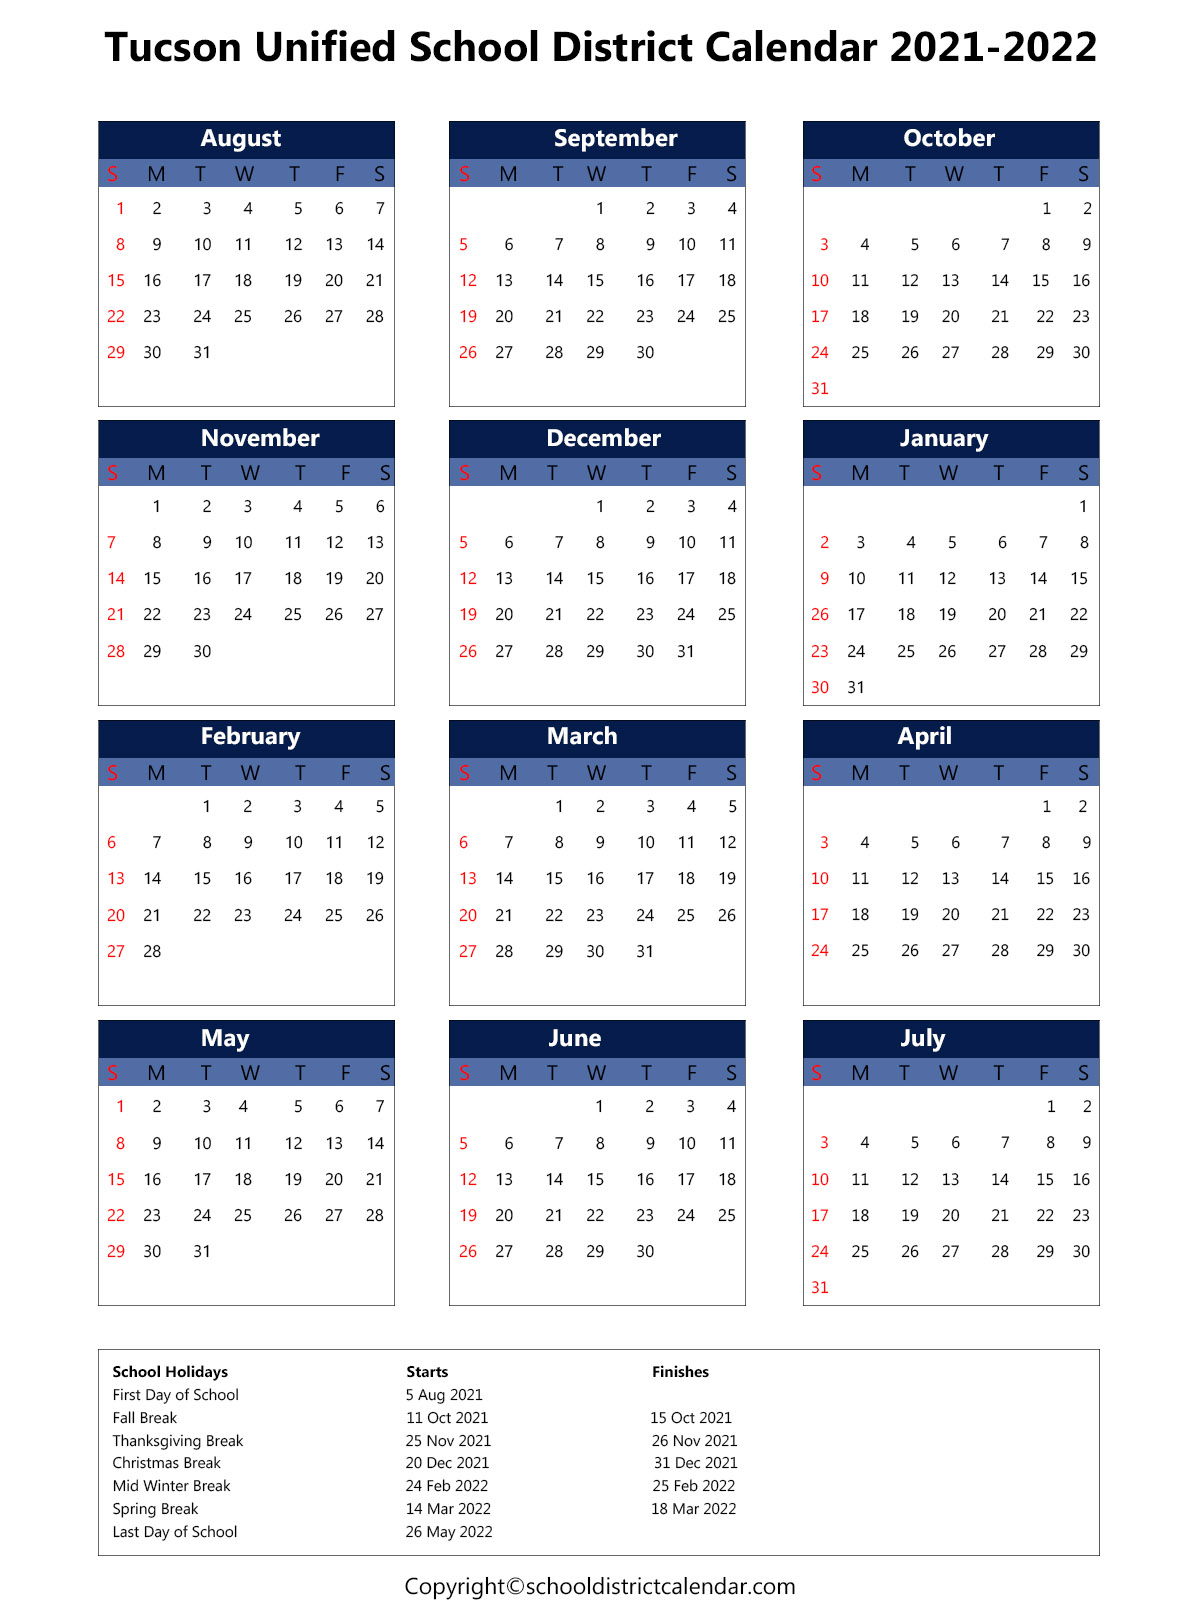 Tusd Calendar 2022 Tucson Unified School District Calendar Holidays 2021-2022